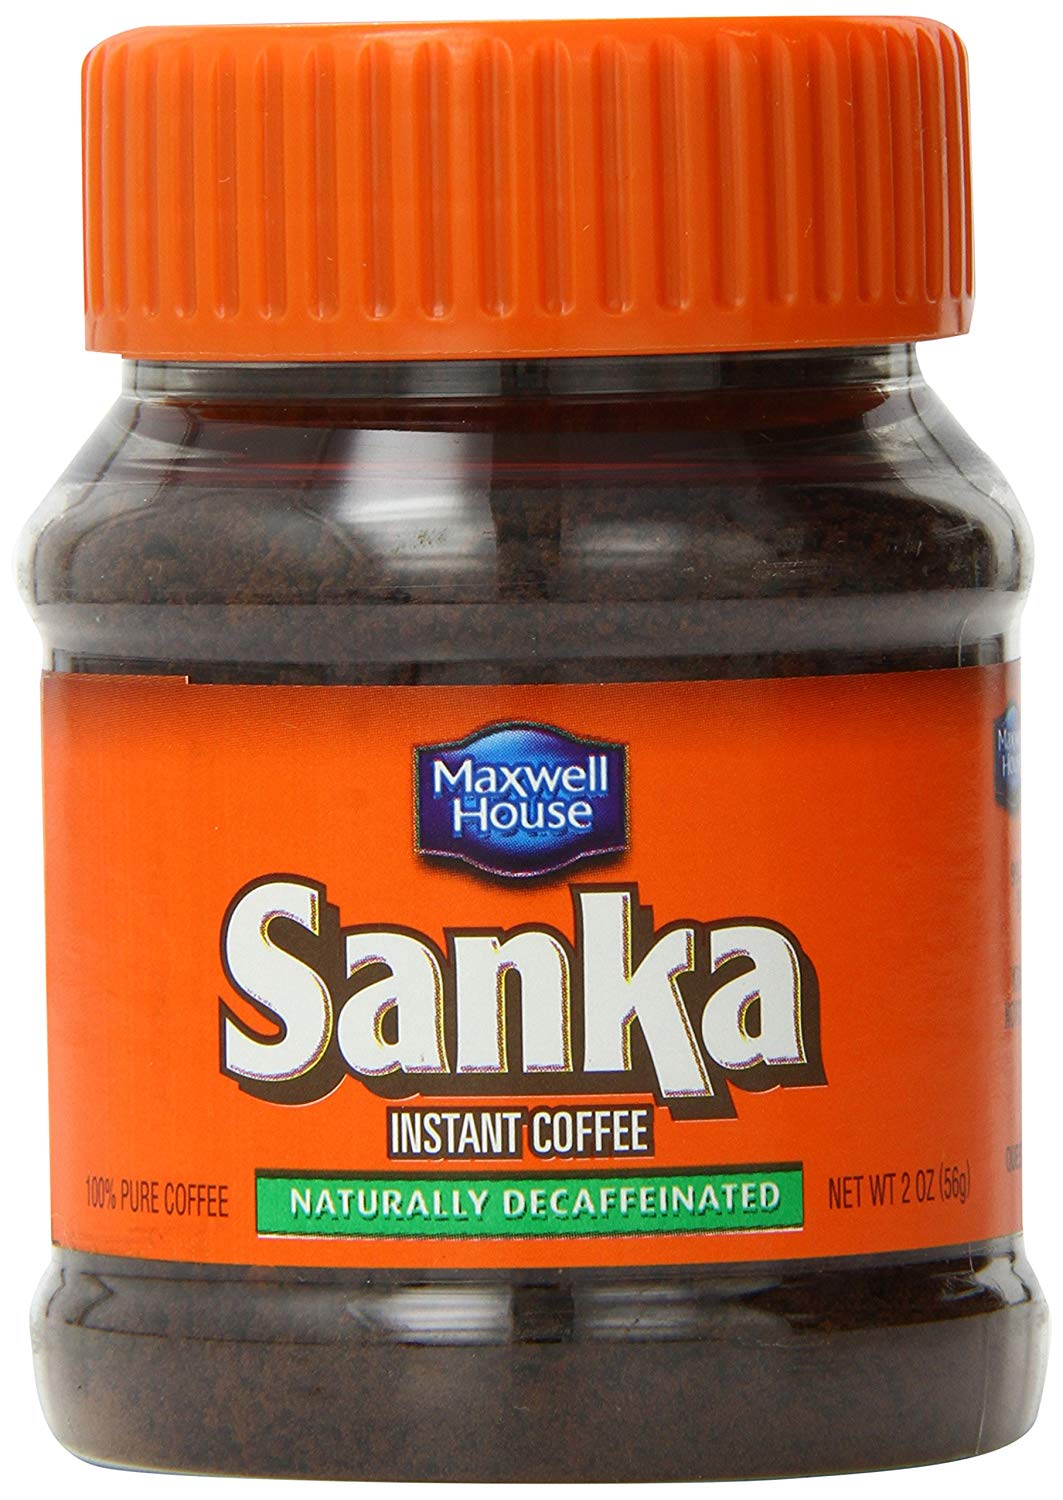 Sanka Coffee Instant, 2 oz - Case of 12 - image 1 of 3